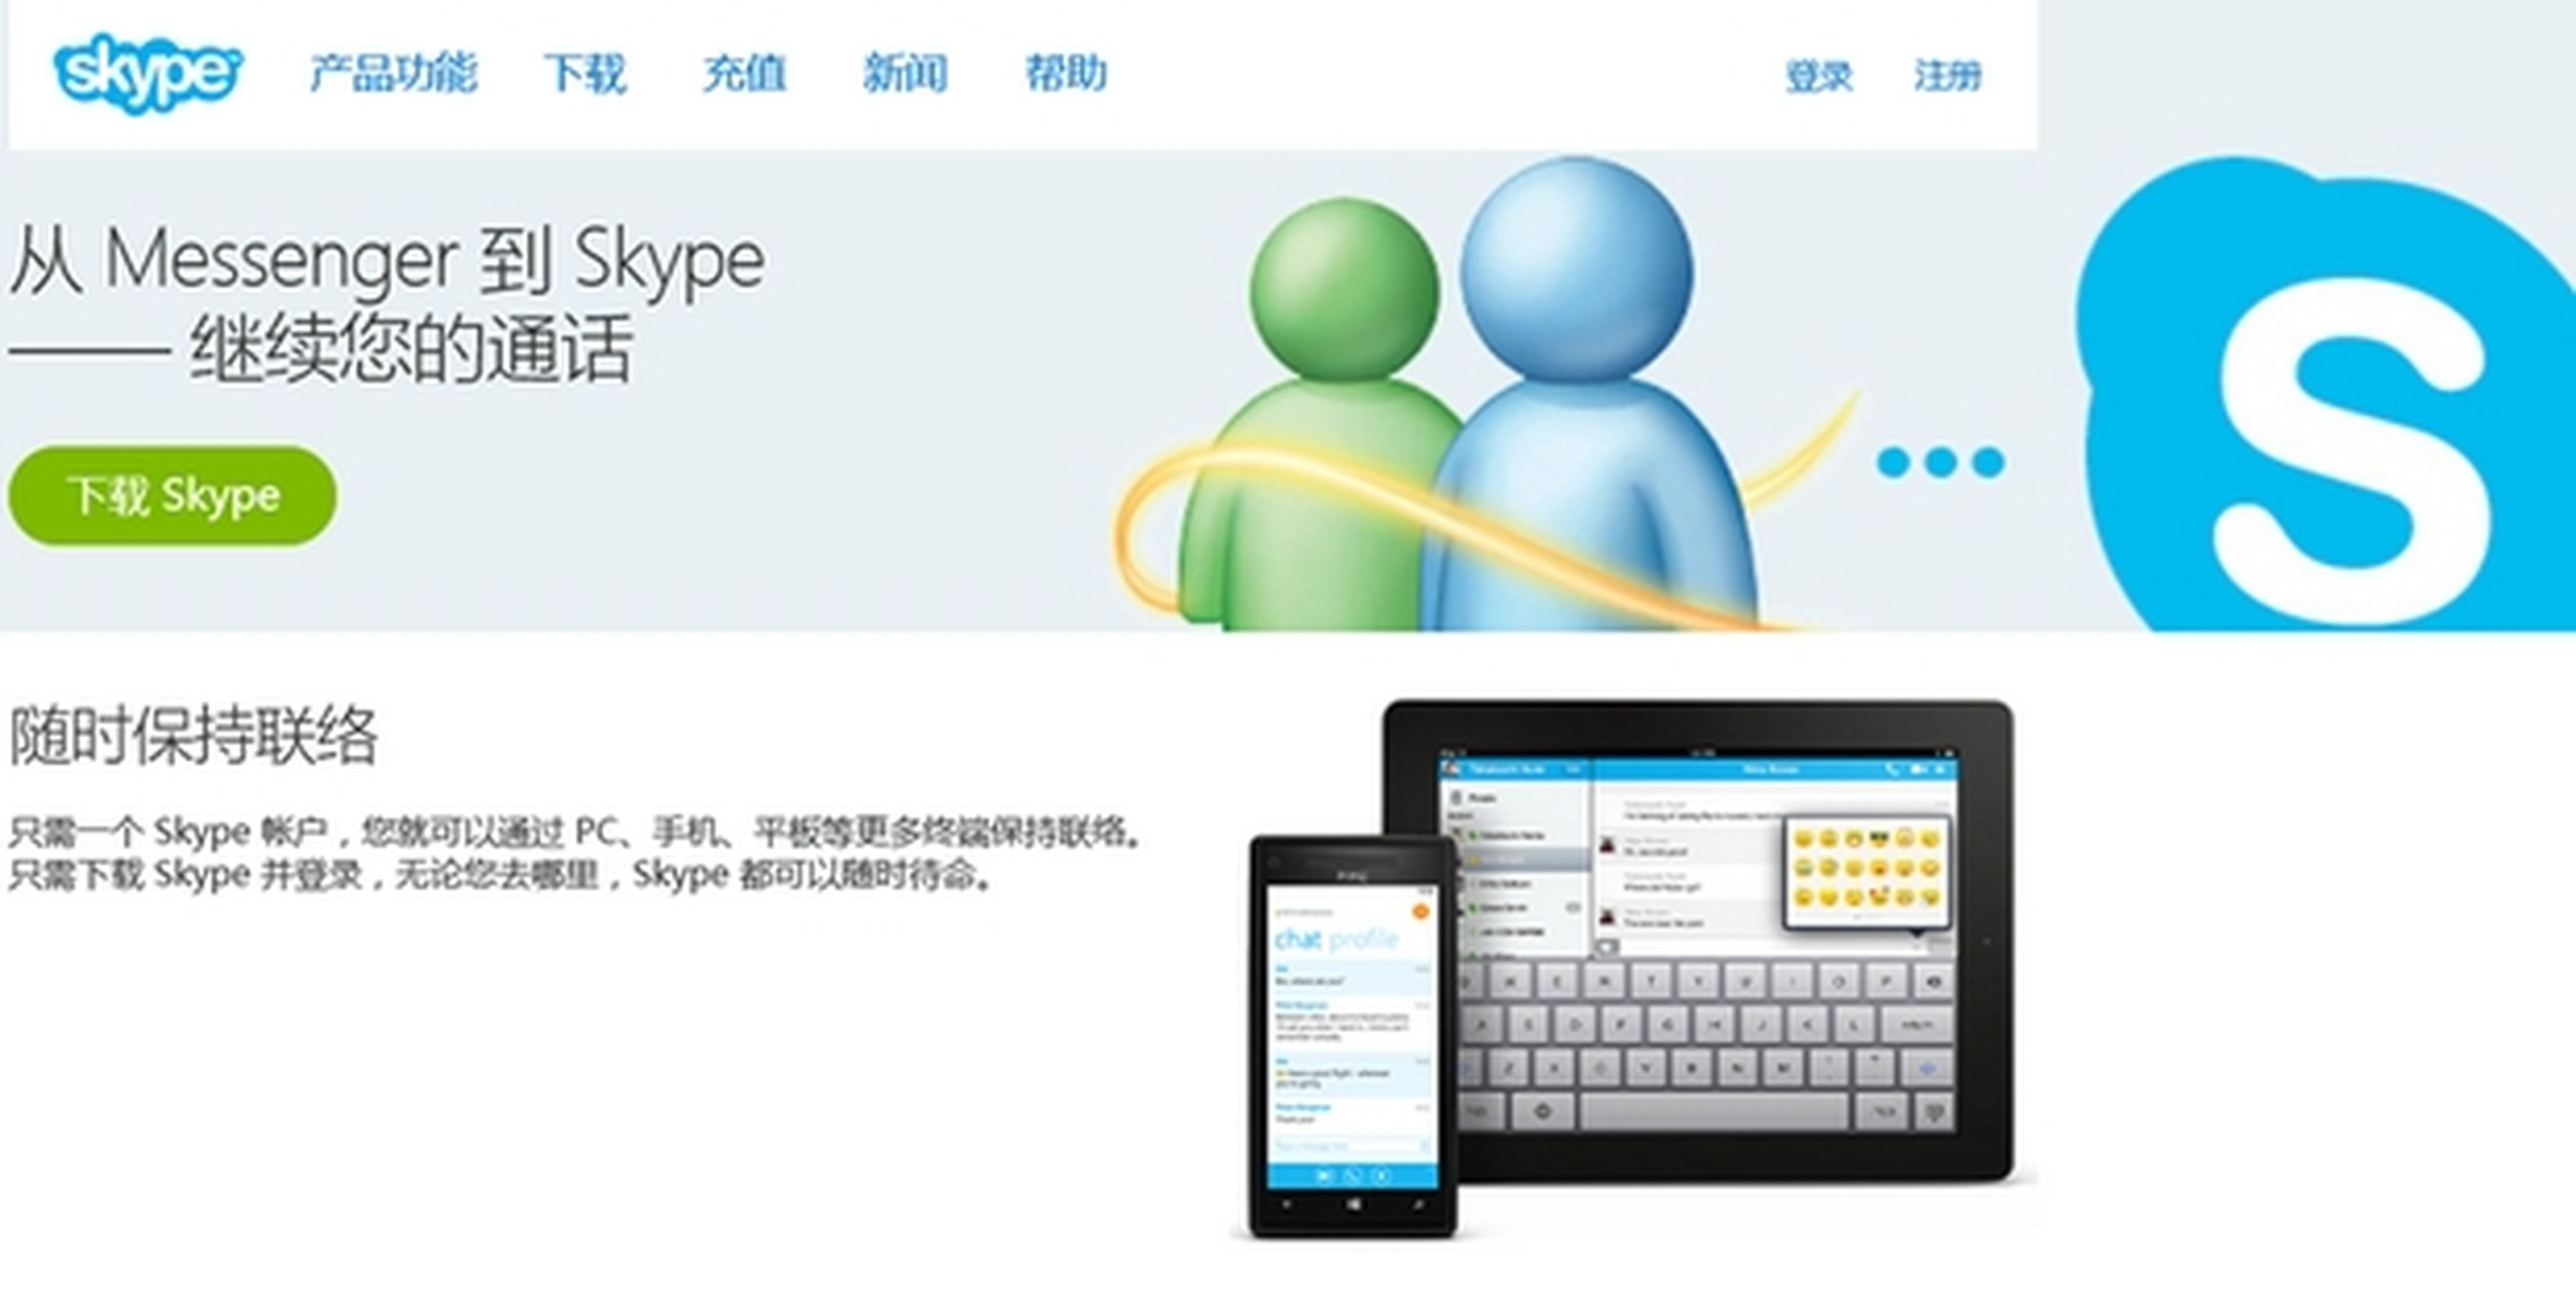 MSN Messenger cierra en China